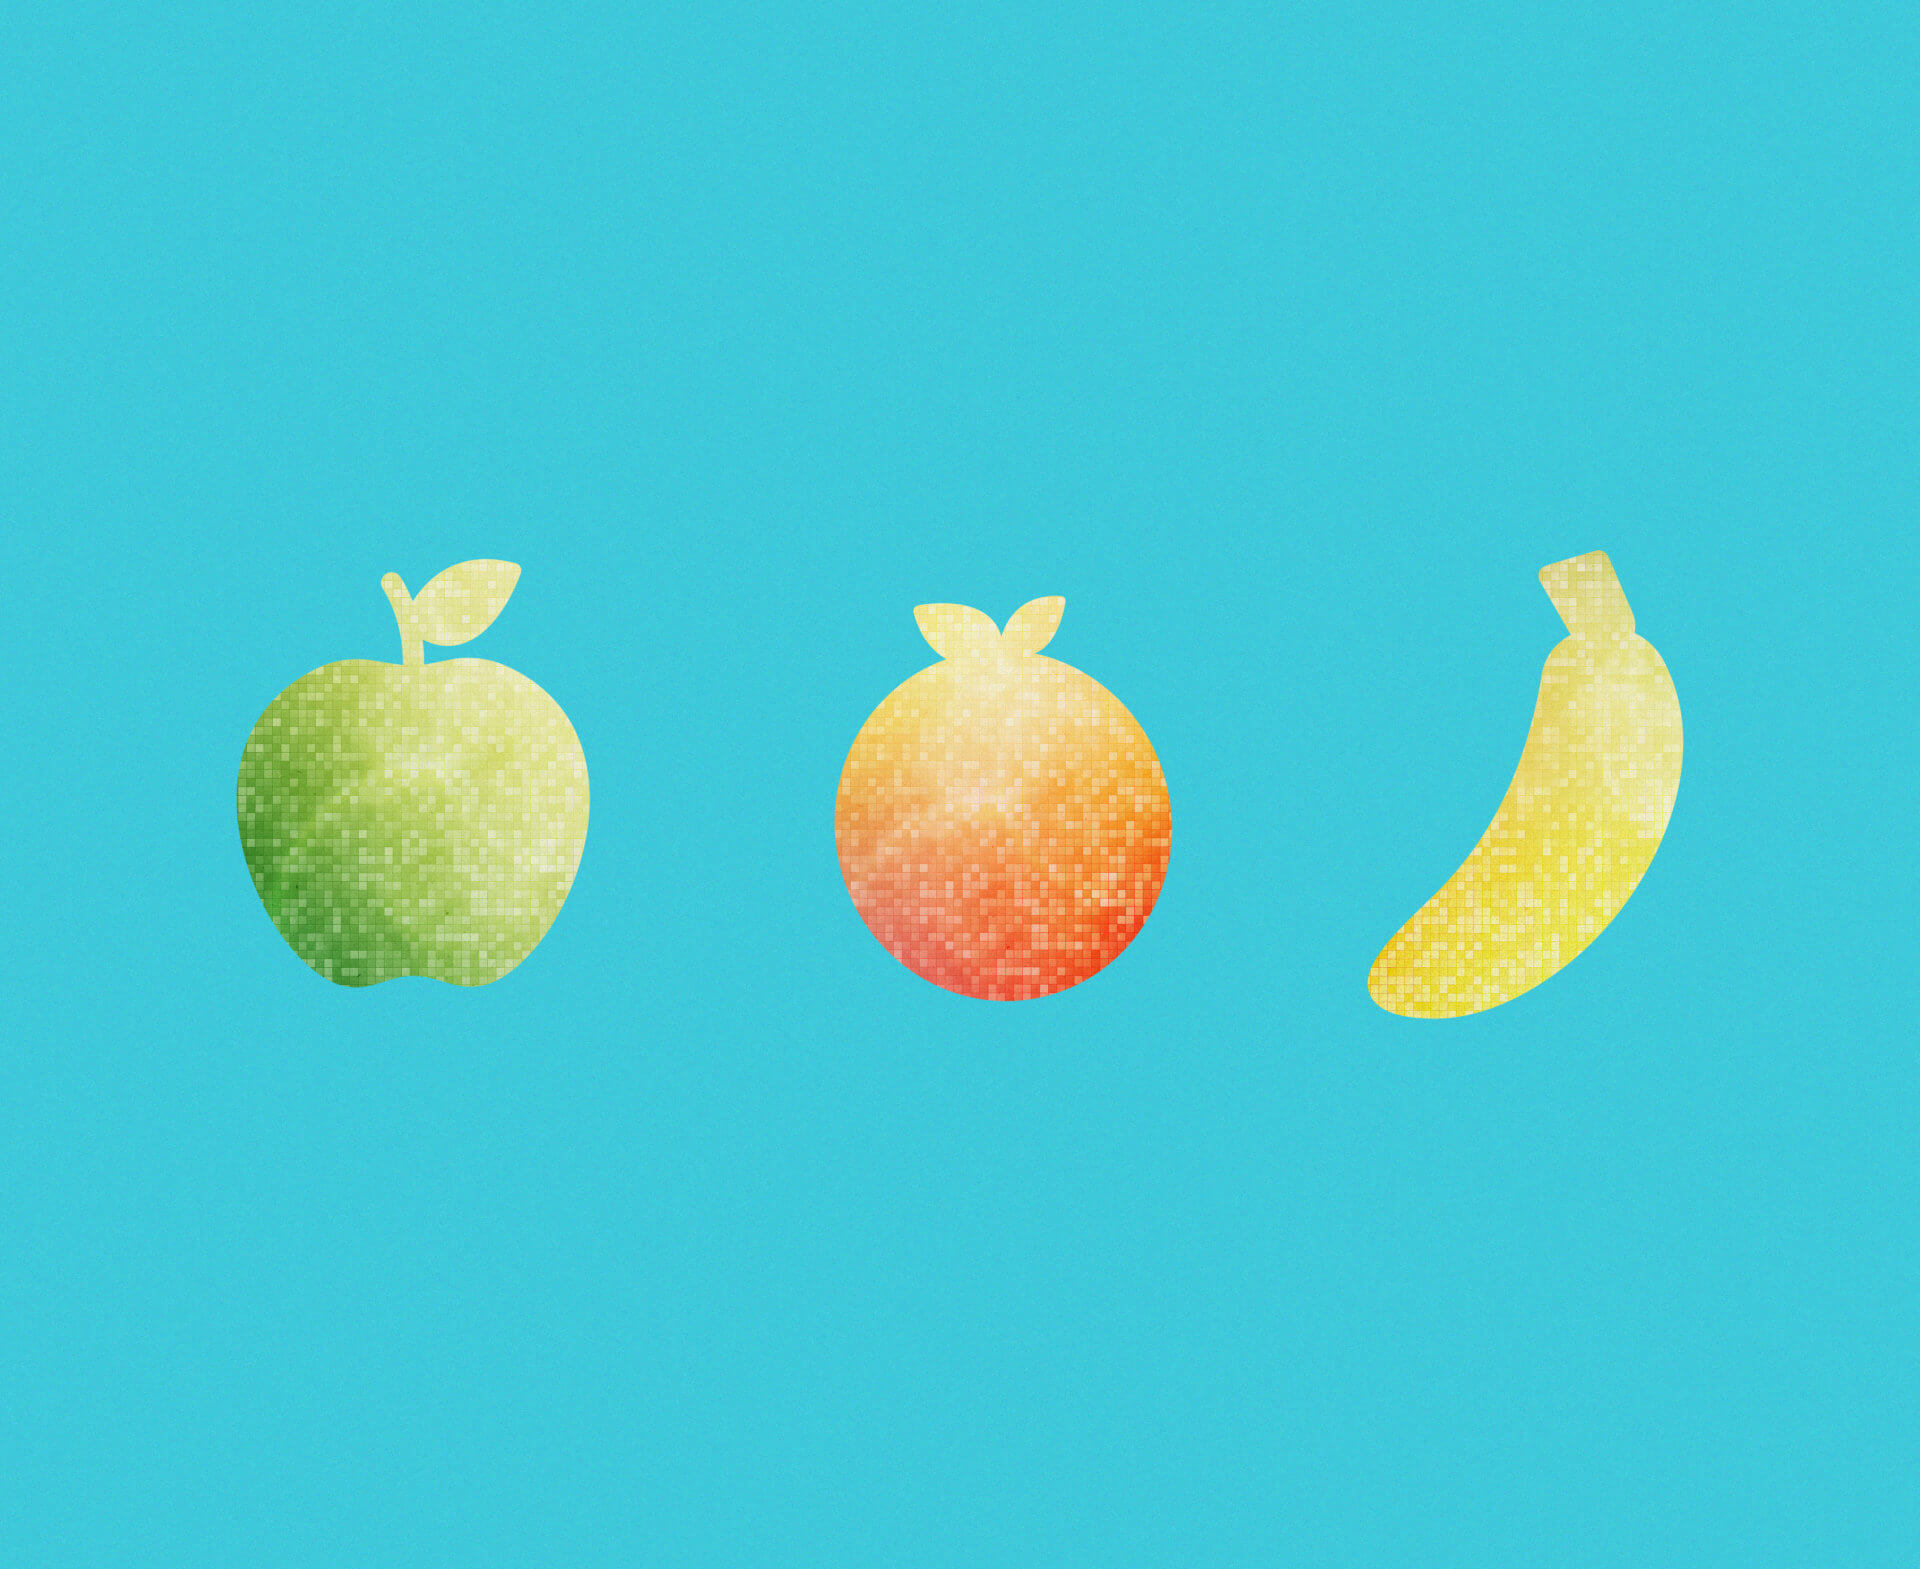 Apple, orange, and banana illustration